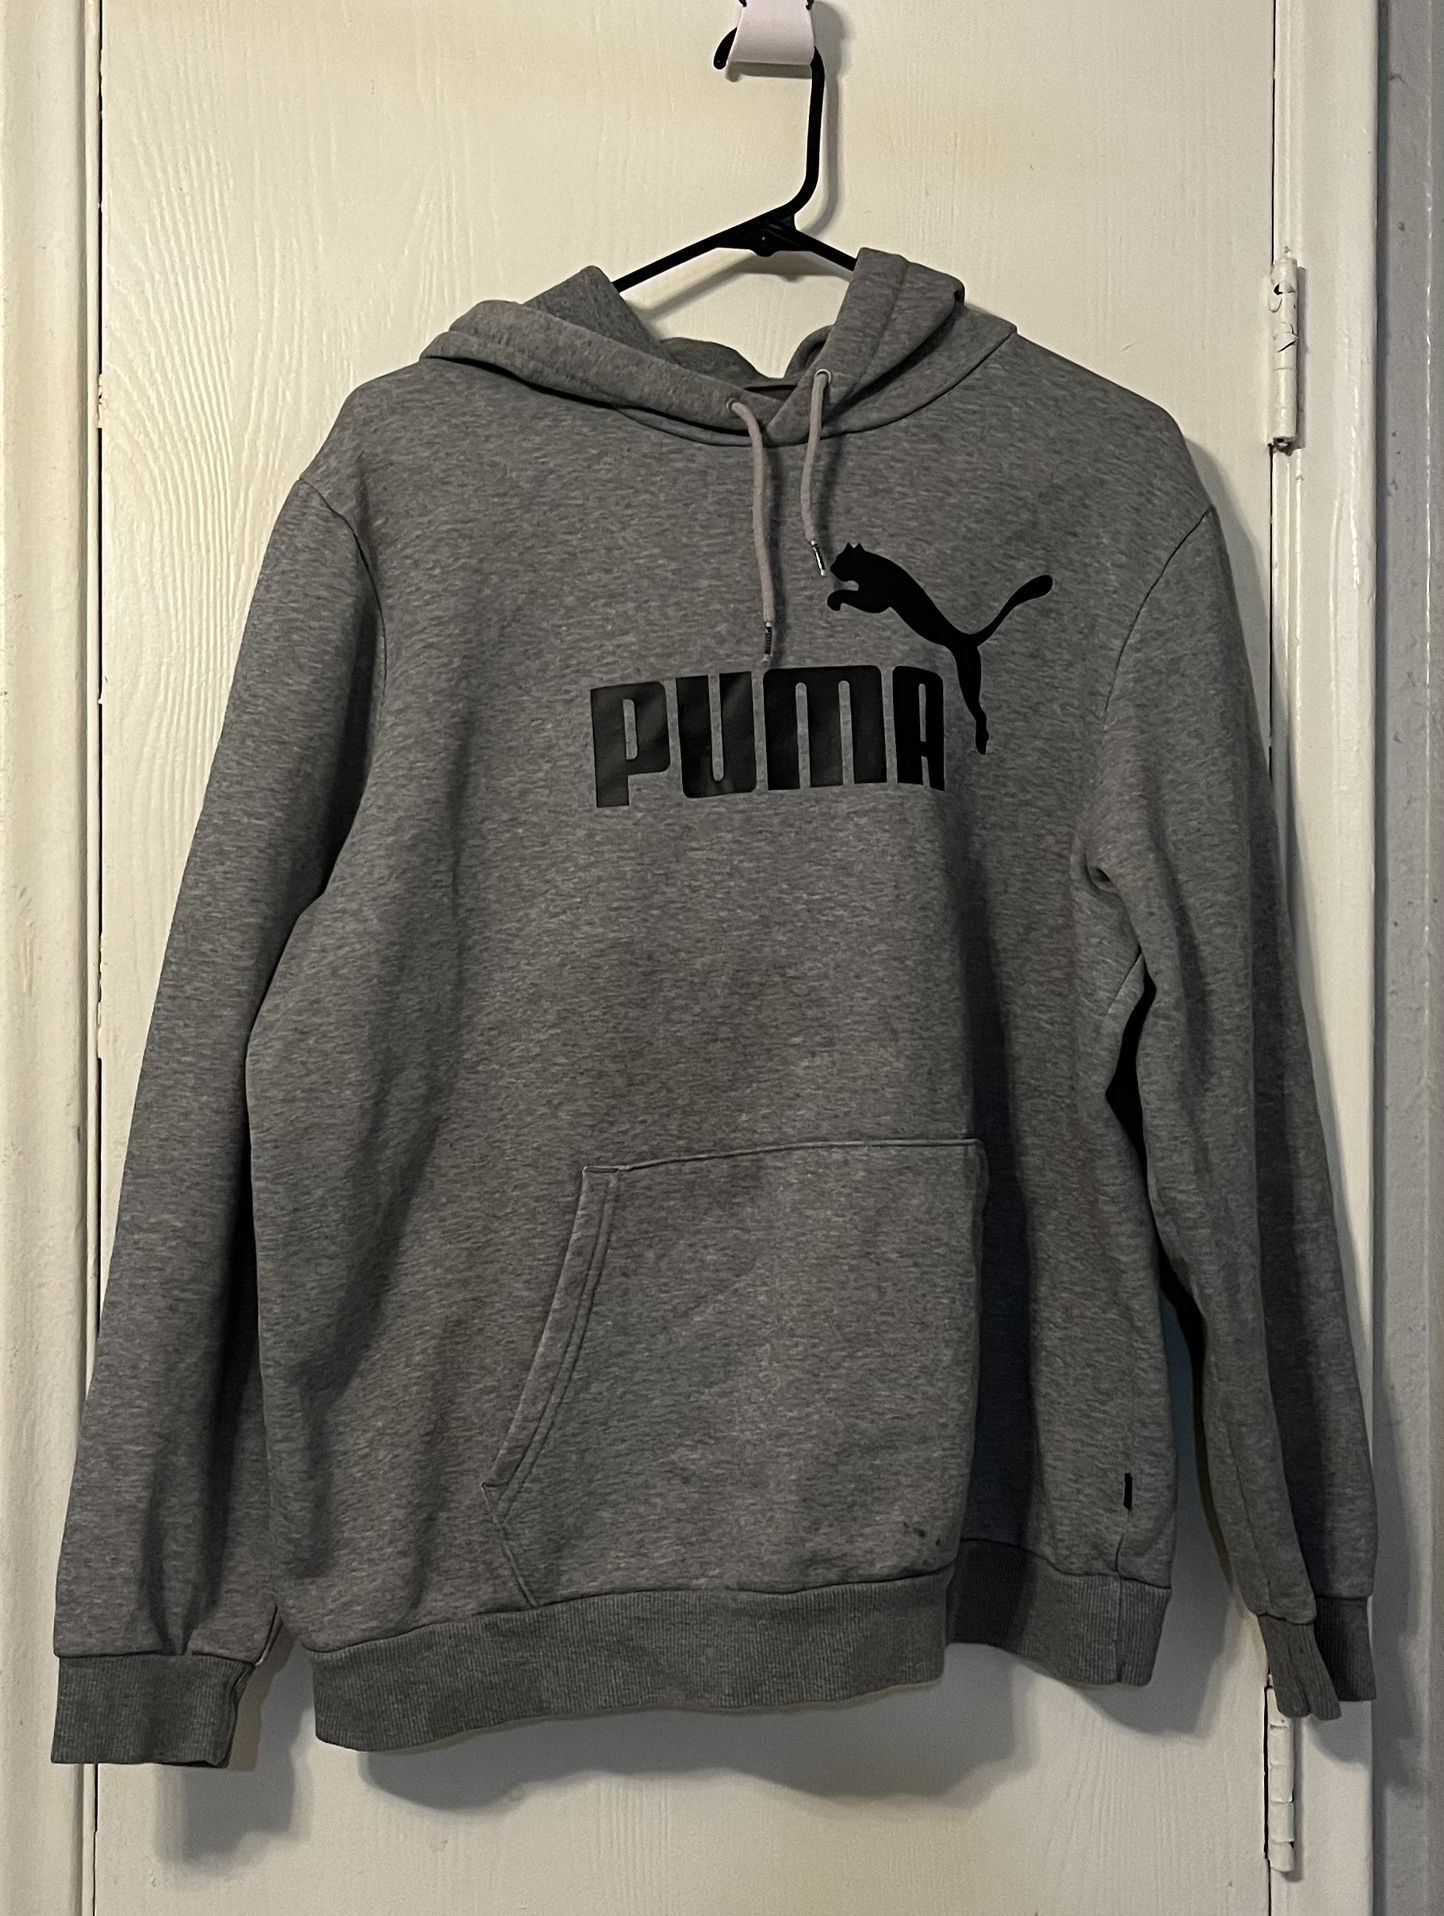 PUMA Mens Graphic Hoodie Sweatshirt Large Grey Cotton